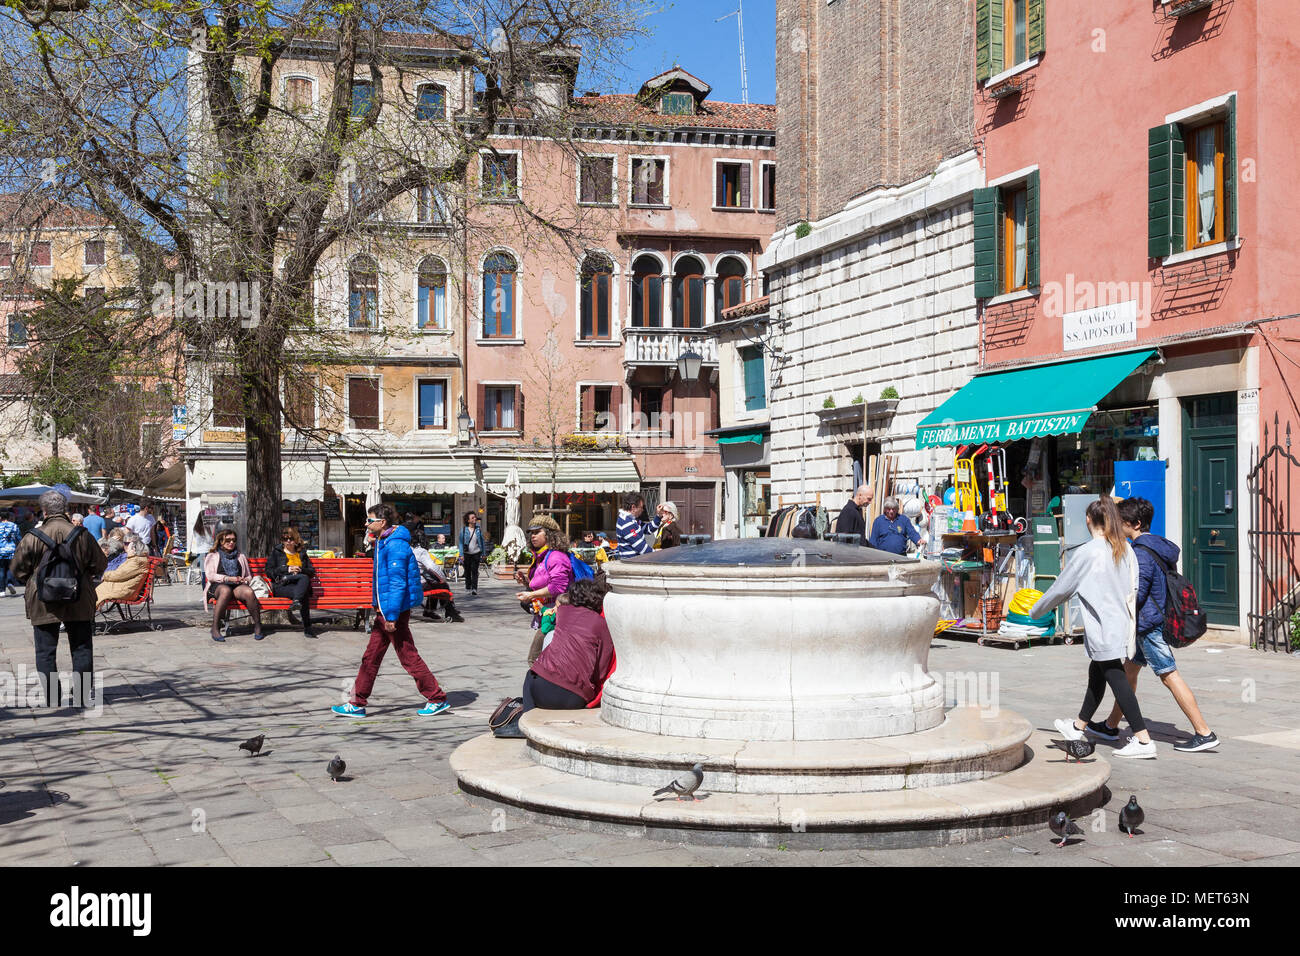 The ancient well head or pozzo in Campo Santi Apostoli, Cannaregio, Venice, Veneto, Italy with people enjoying a sunny spring day Stock Photo